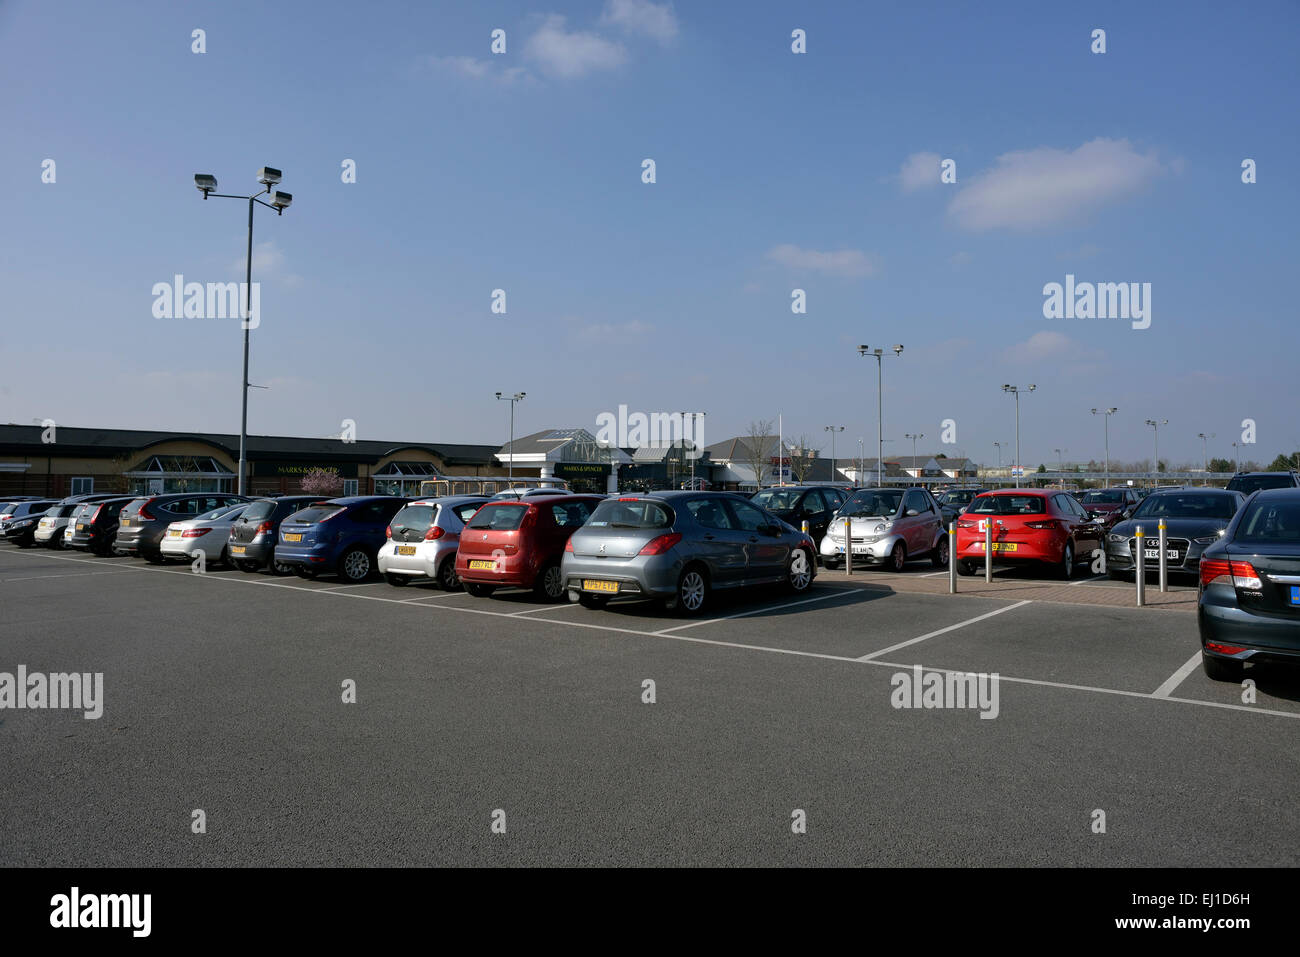 car park at handforth dean shopping centre Stock Photo